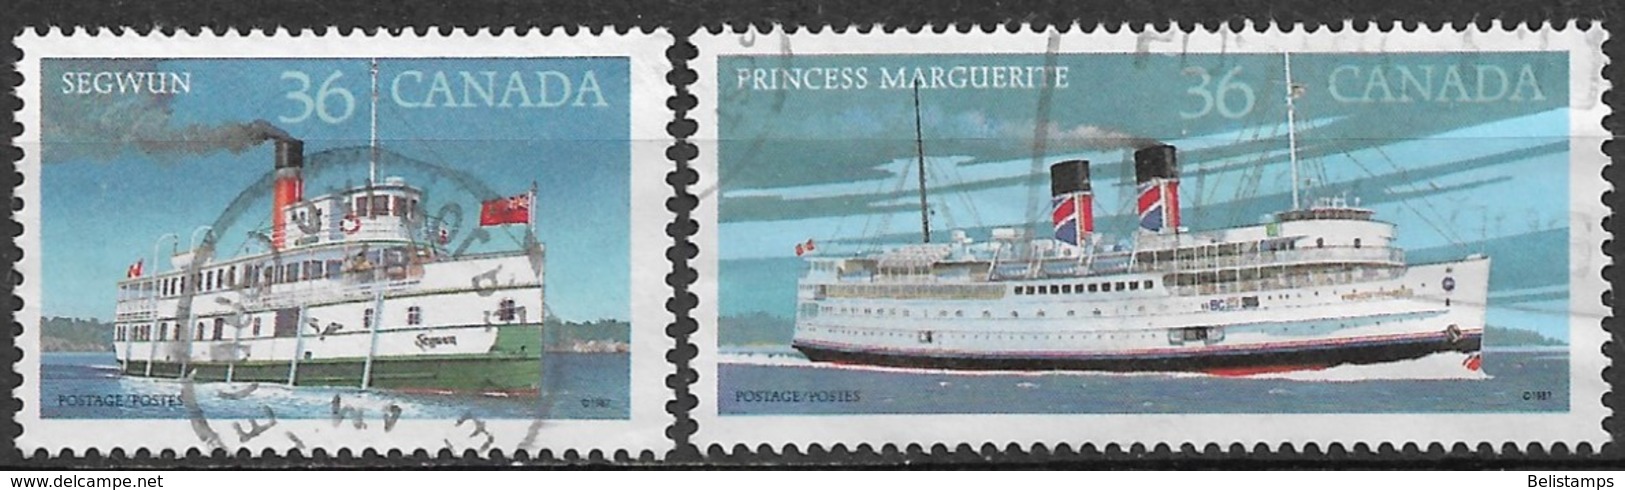 Canada 1987. Scott #1139-40 (U) Segwun, 1887 & Princess Marguerite, 1948, Steamships ** Complet Set - Used Stamps